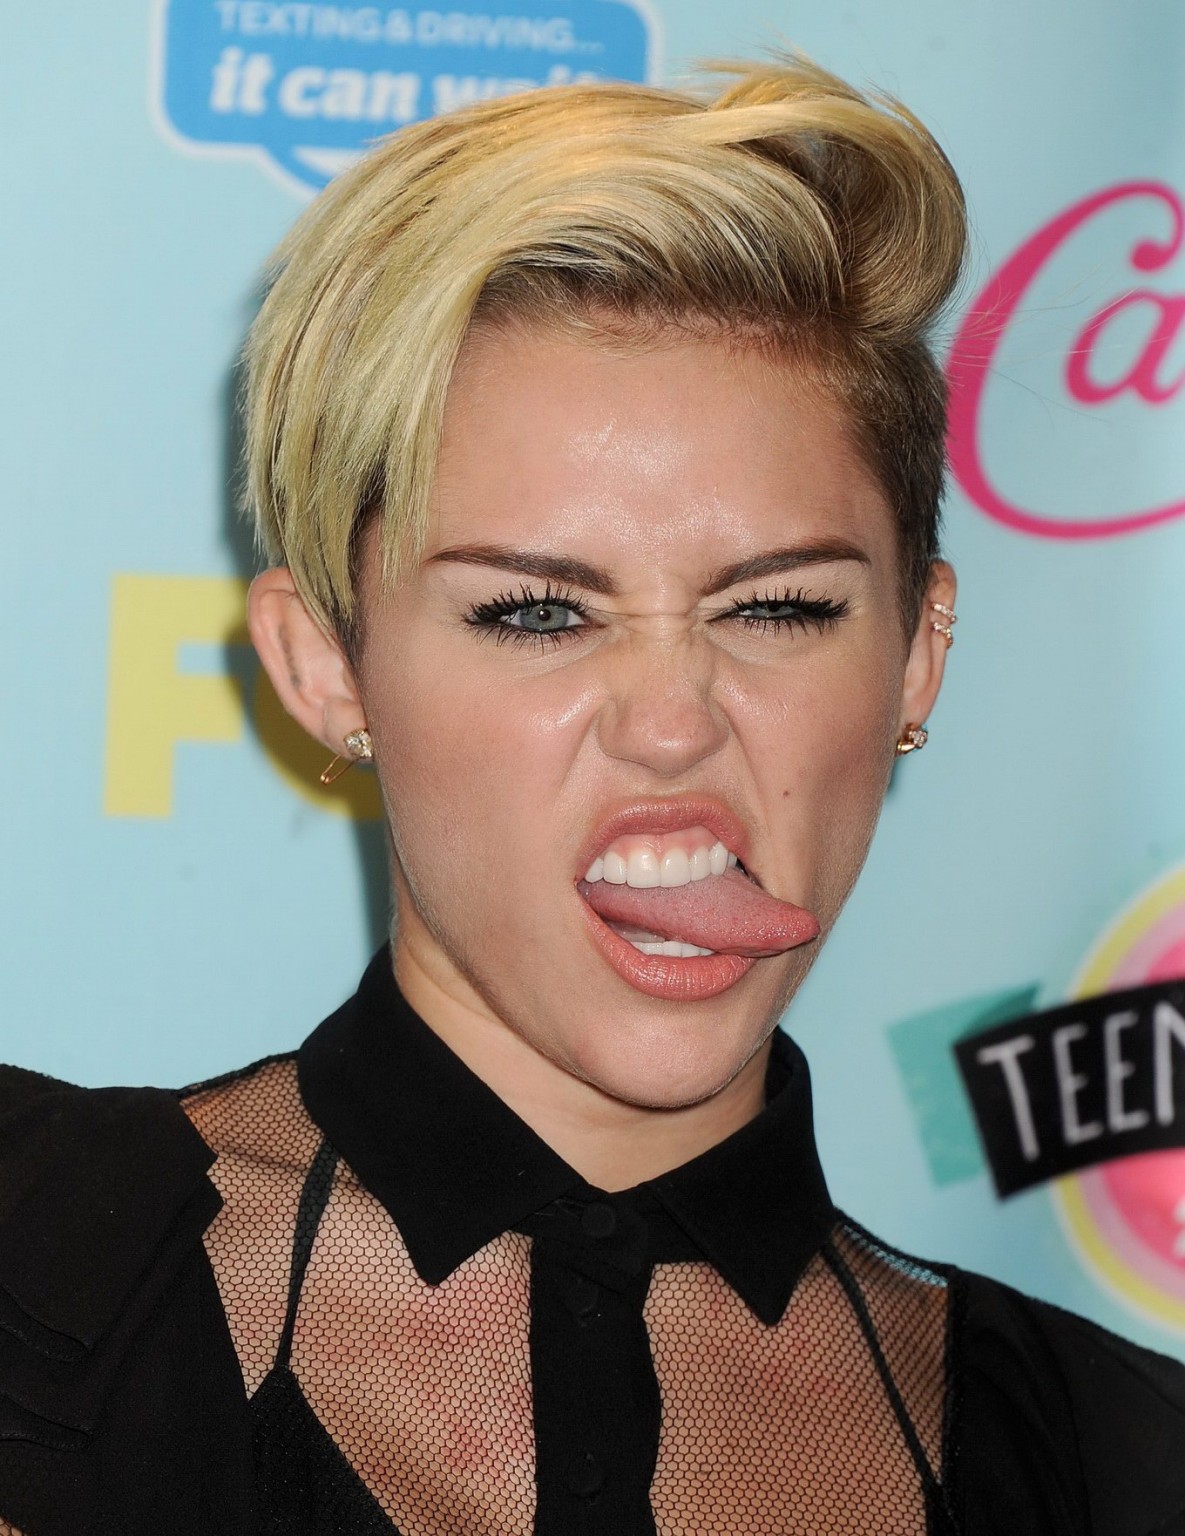 Miley cyrus indossa reggiseno in pelle nera e gonna mikro al 2013 teen choice awards
 #75221927